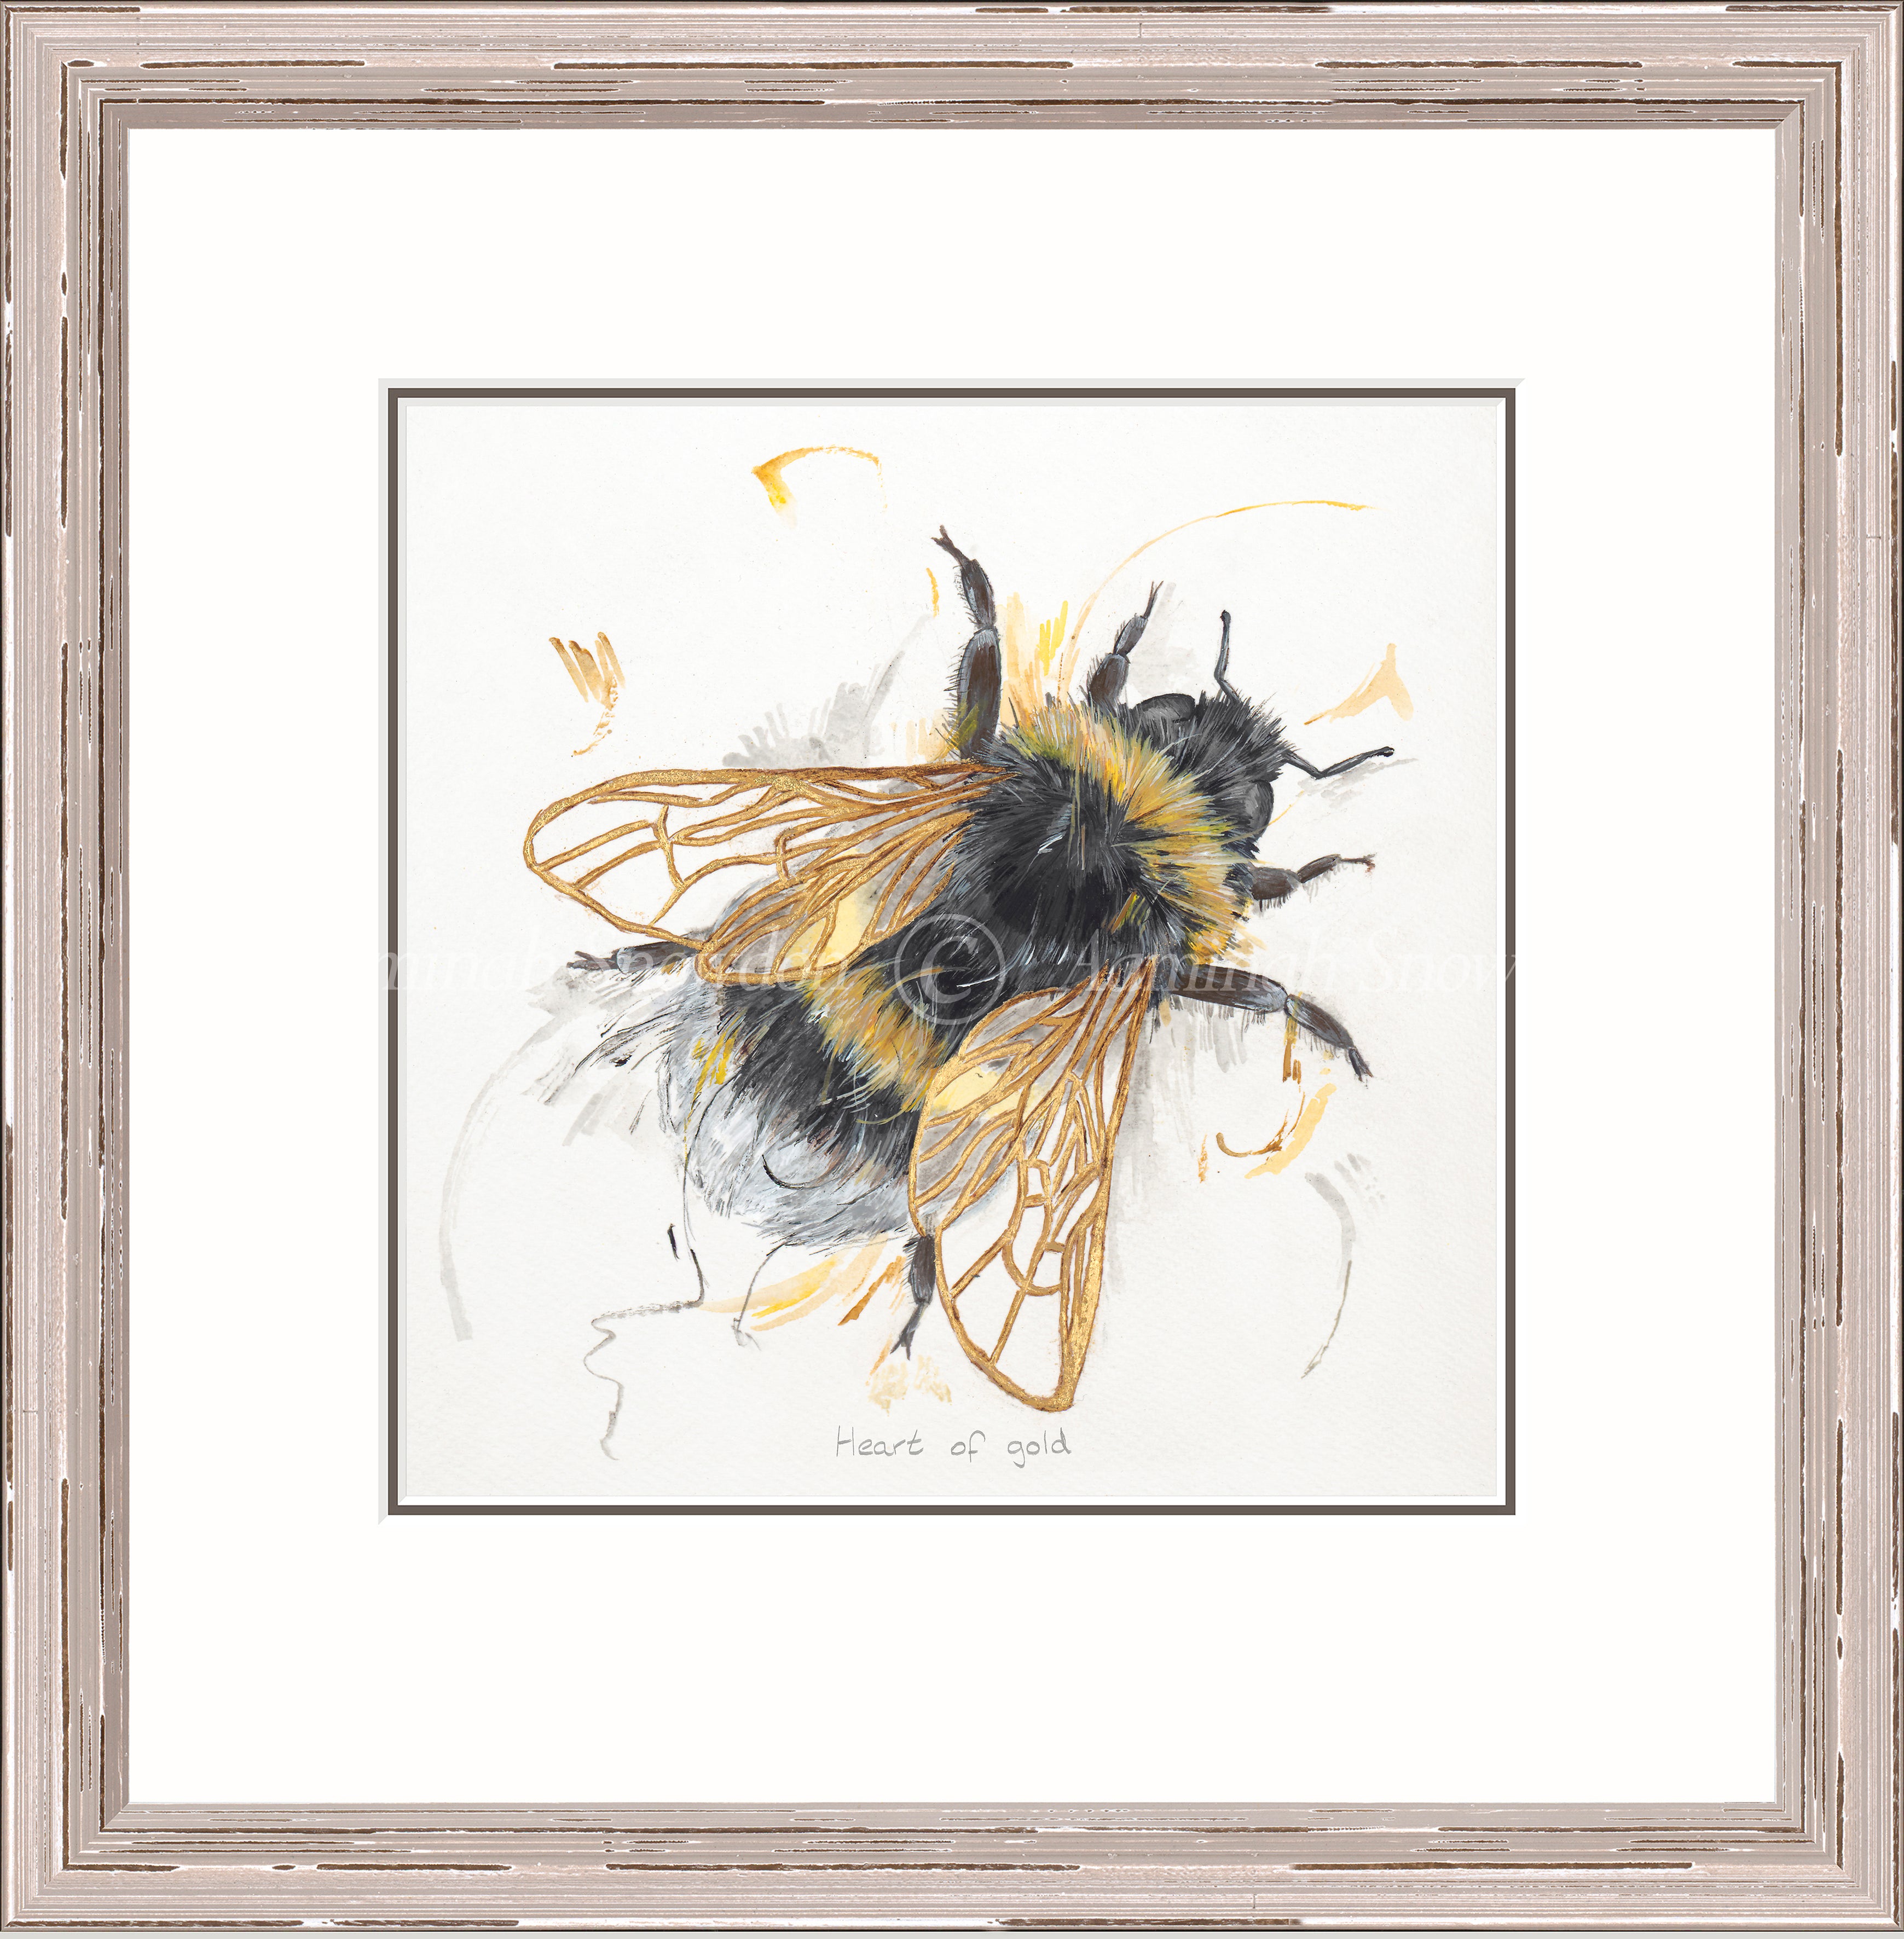 Aaminah Snowdon Heart of Gold Bee framed